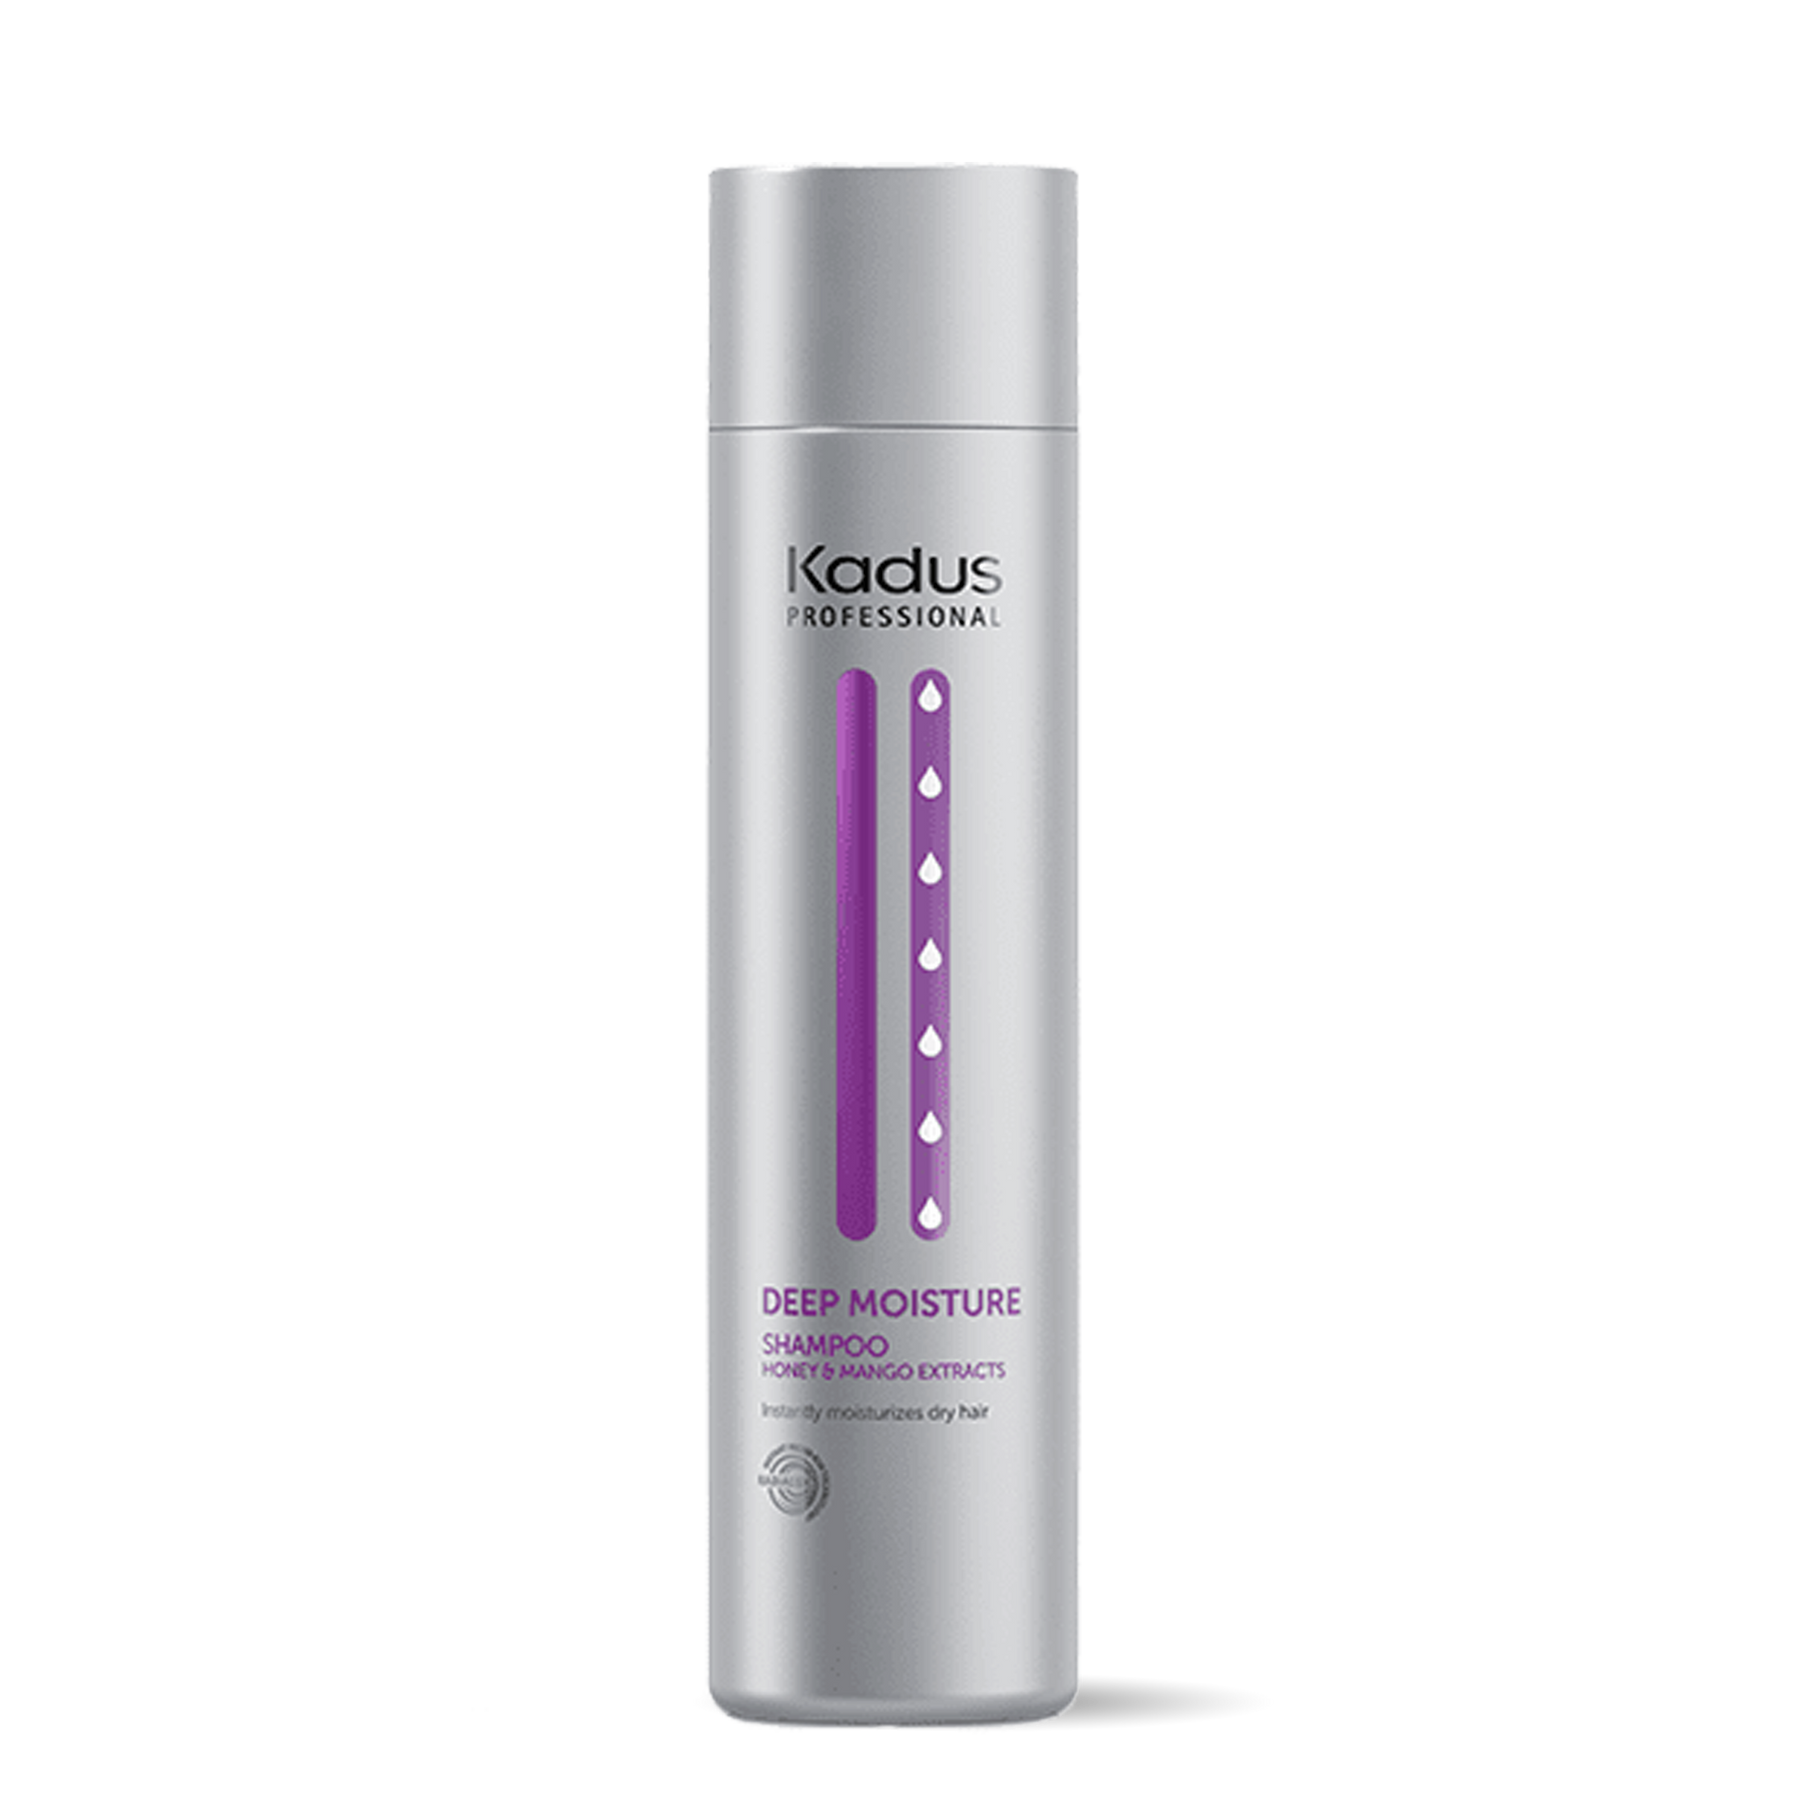 Kadus Deep Moisture Shampoo 250ml - by Kadus Professionals |ProCare Outlet|